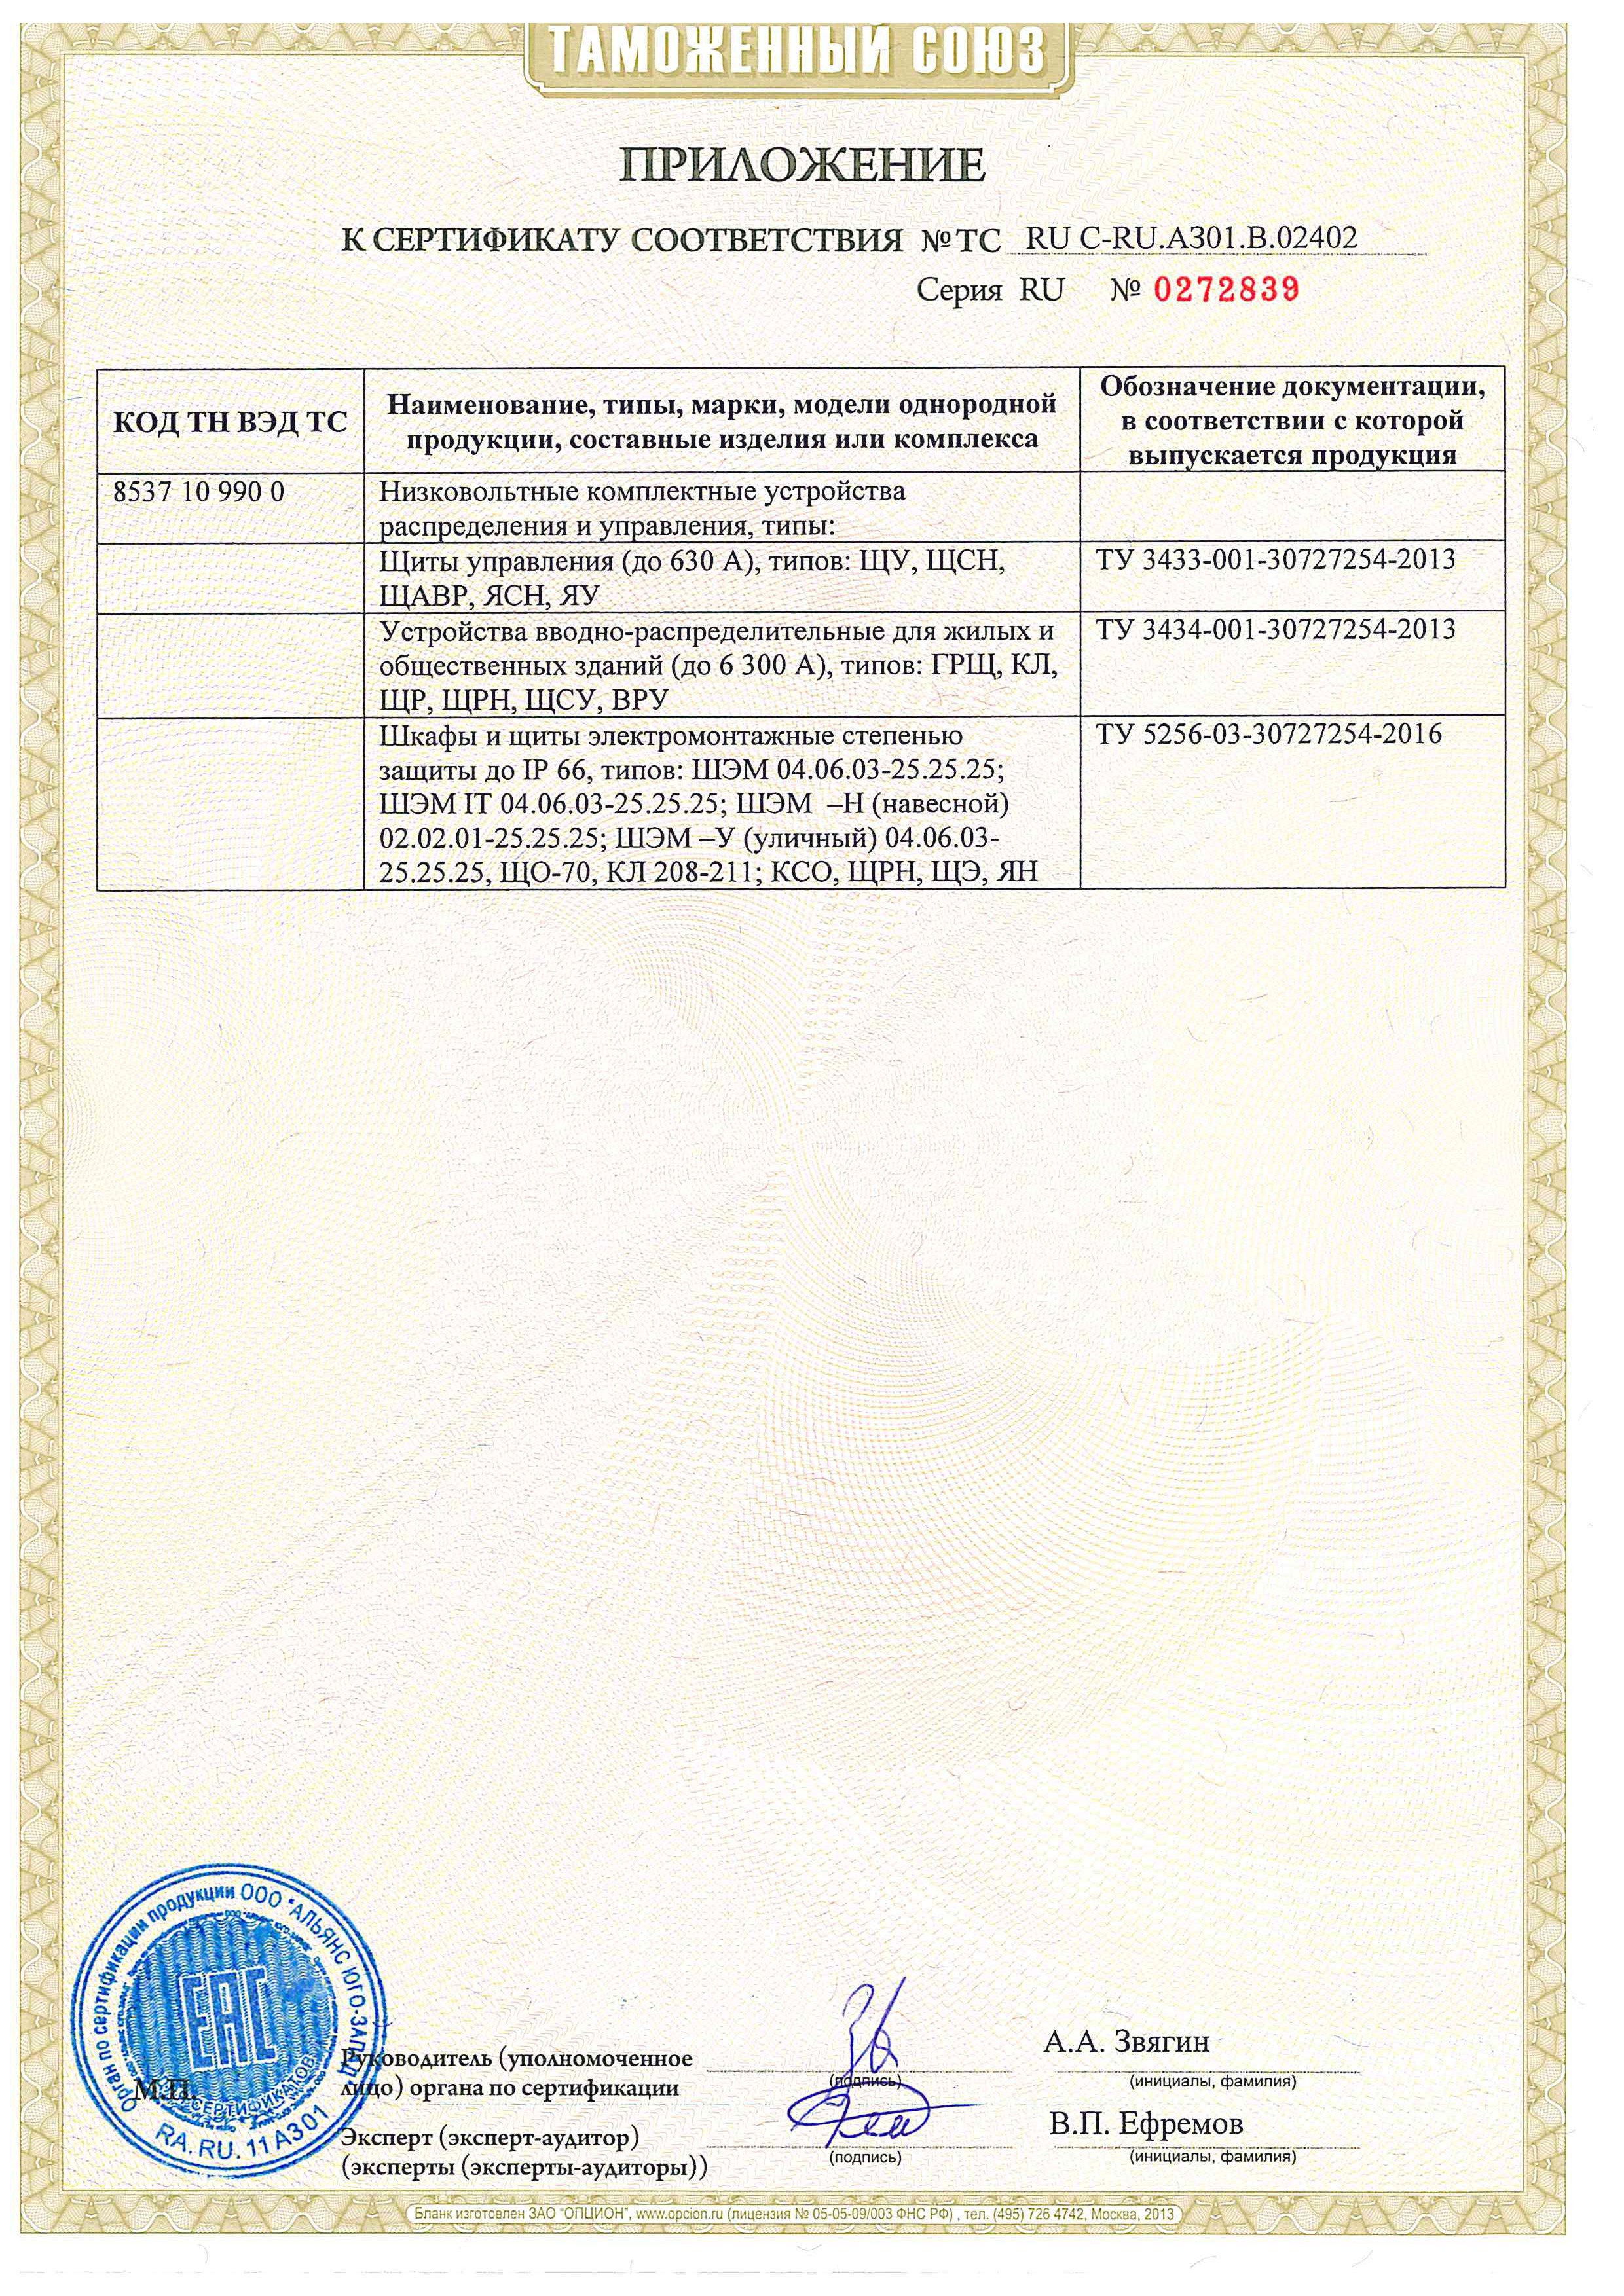 Сертификат на корпуса и сборку